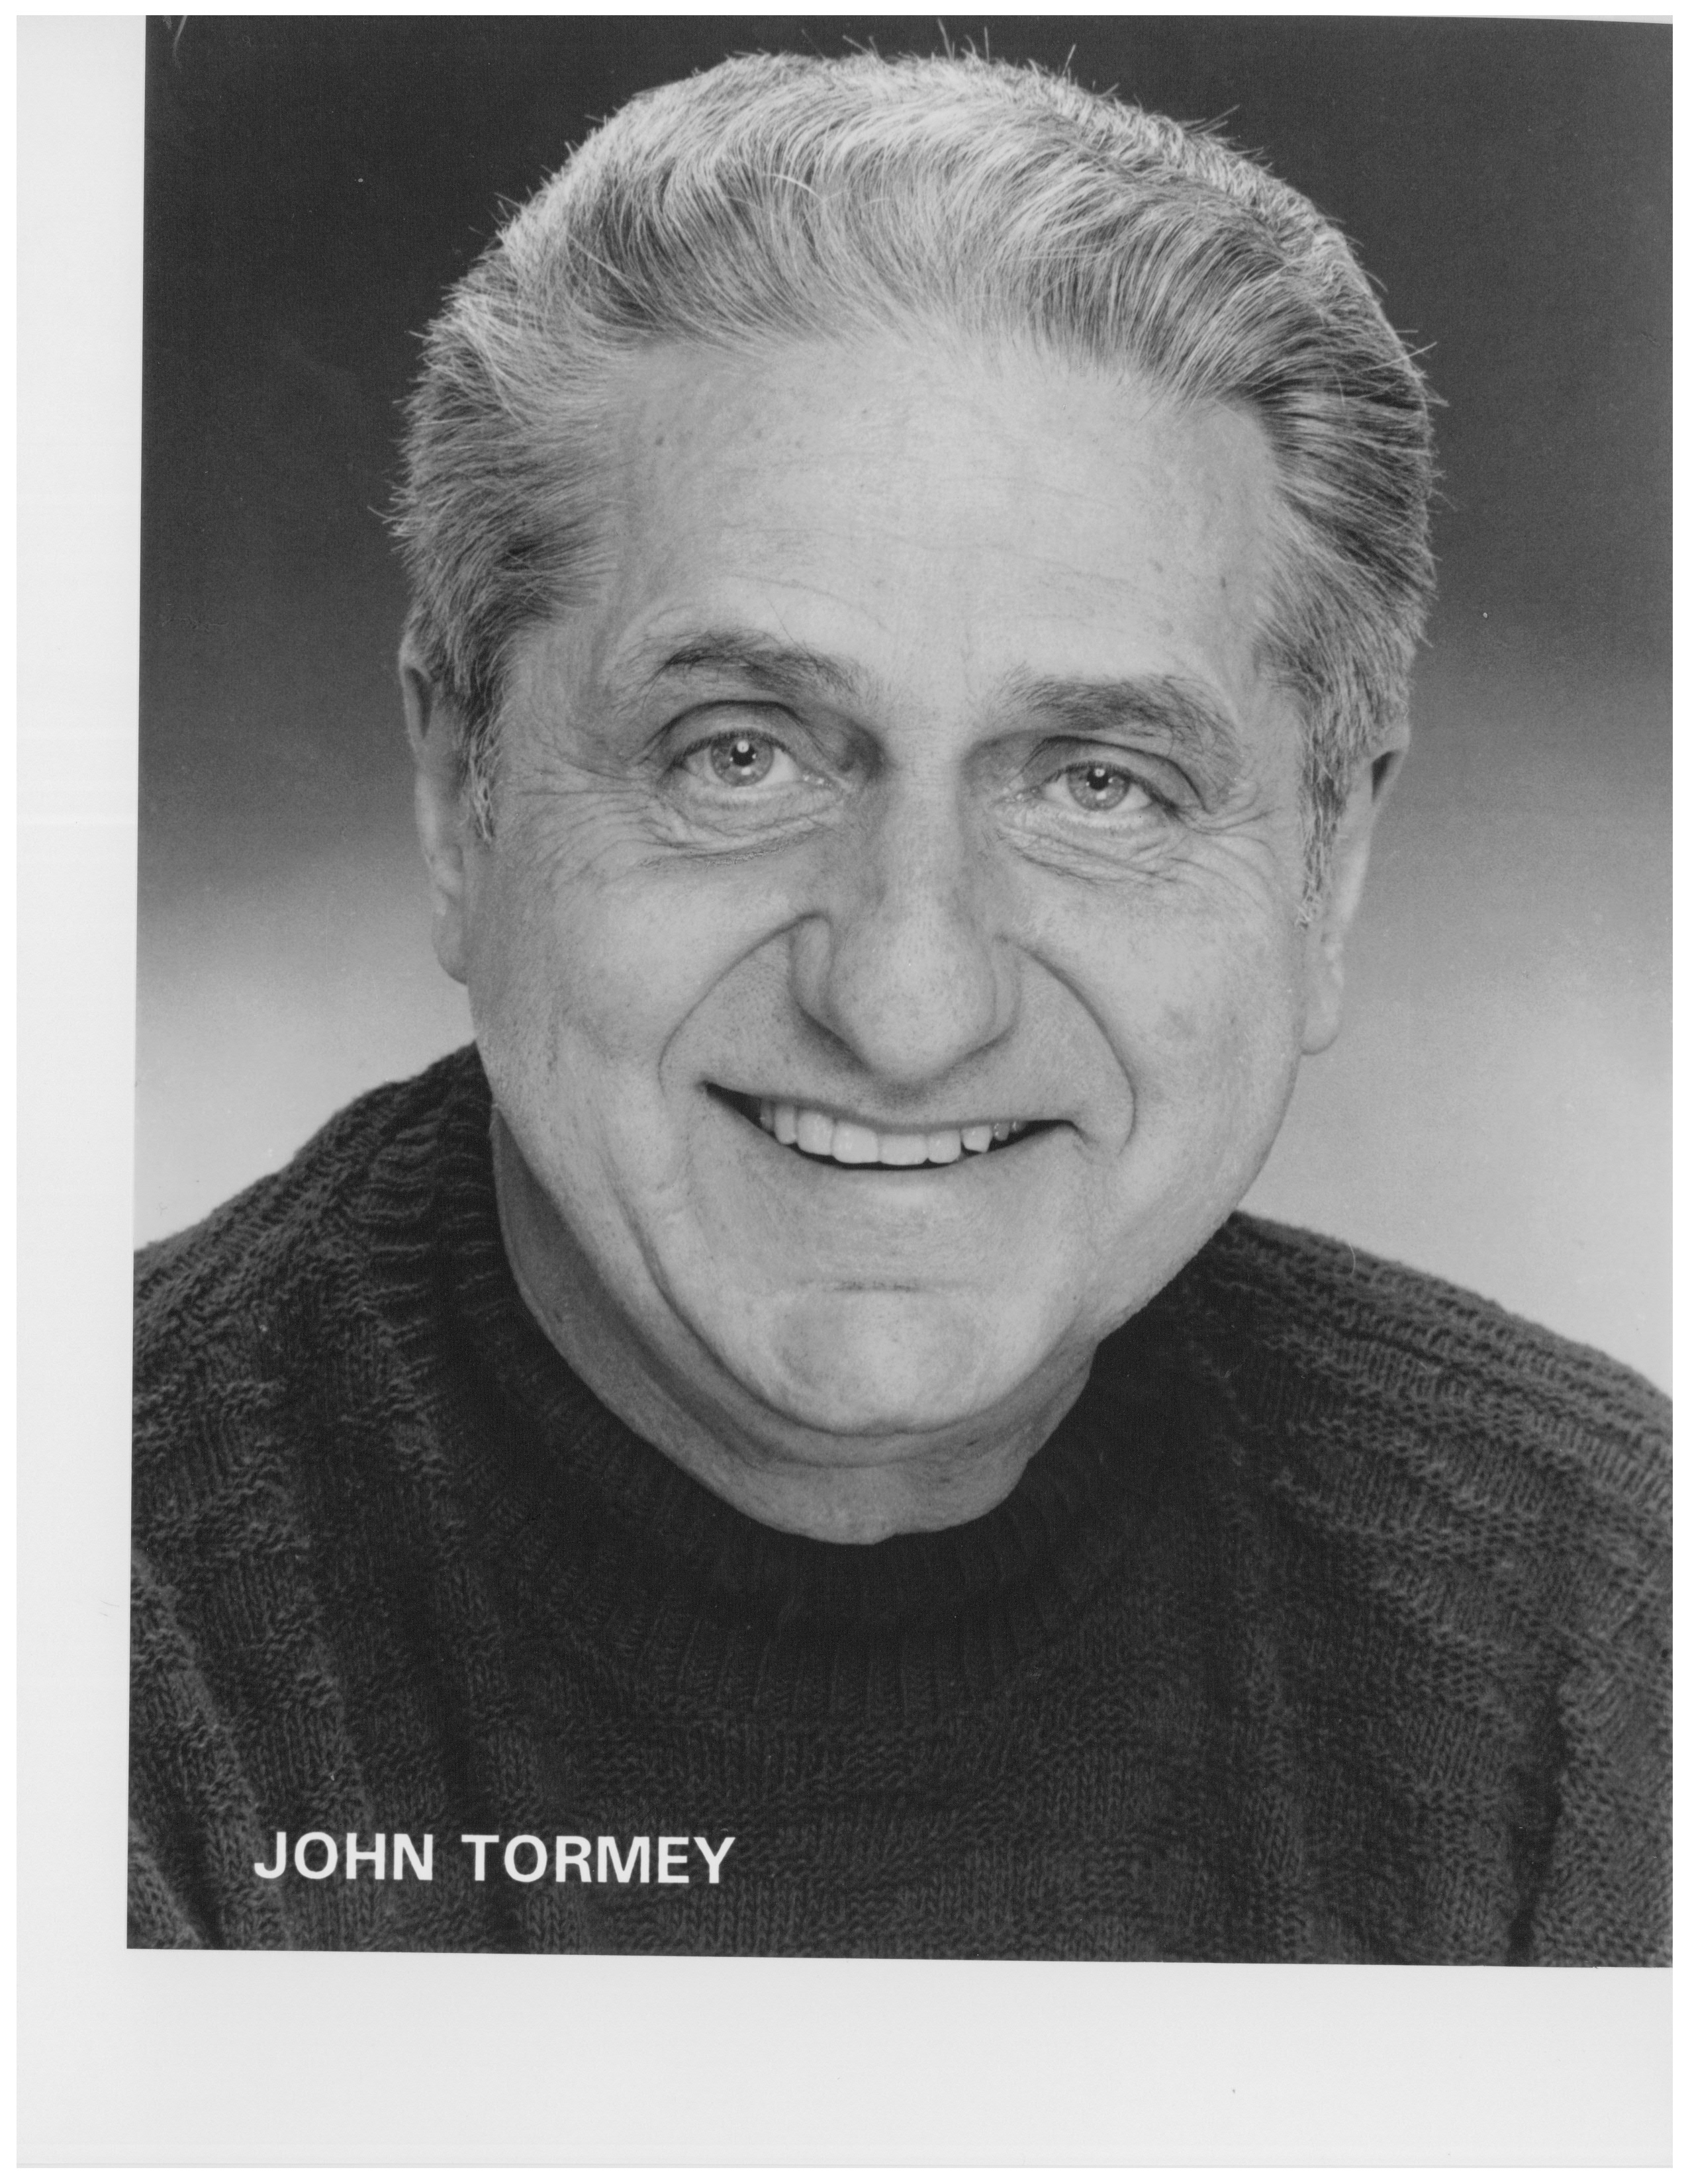 John Tormey